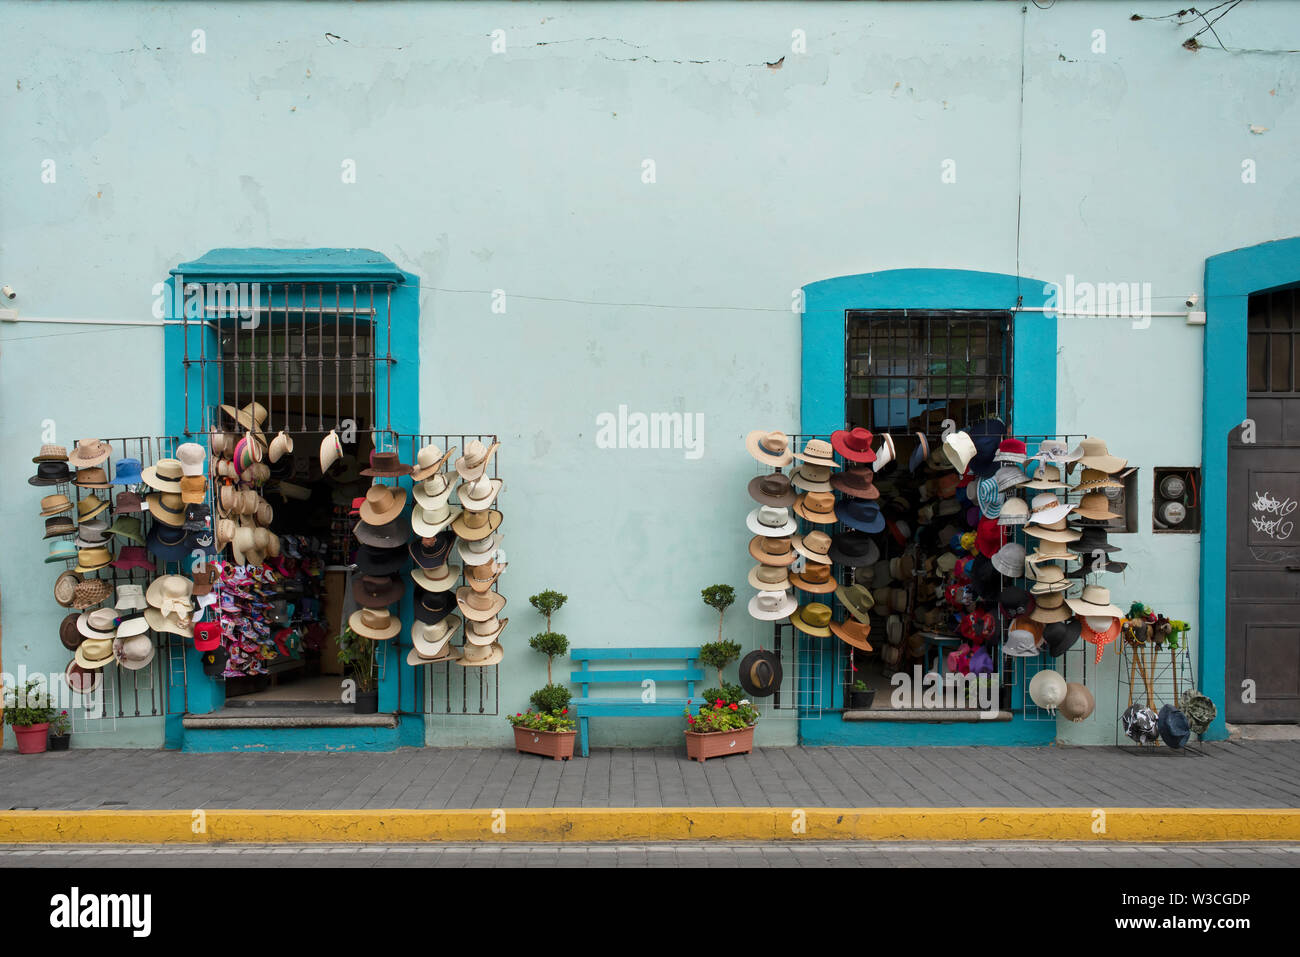 Building facade with souvenir shop displaying hats in downtown Cholula, near Puebla, Mexico. Jun 2019 Stock Photo